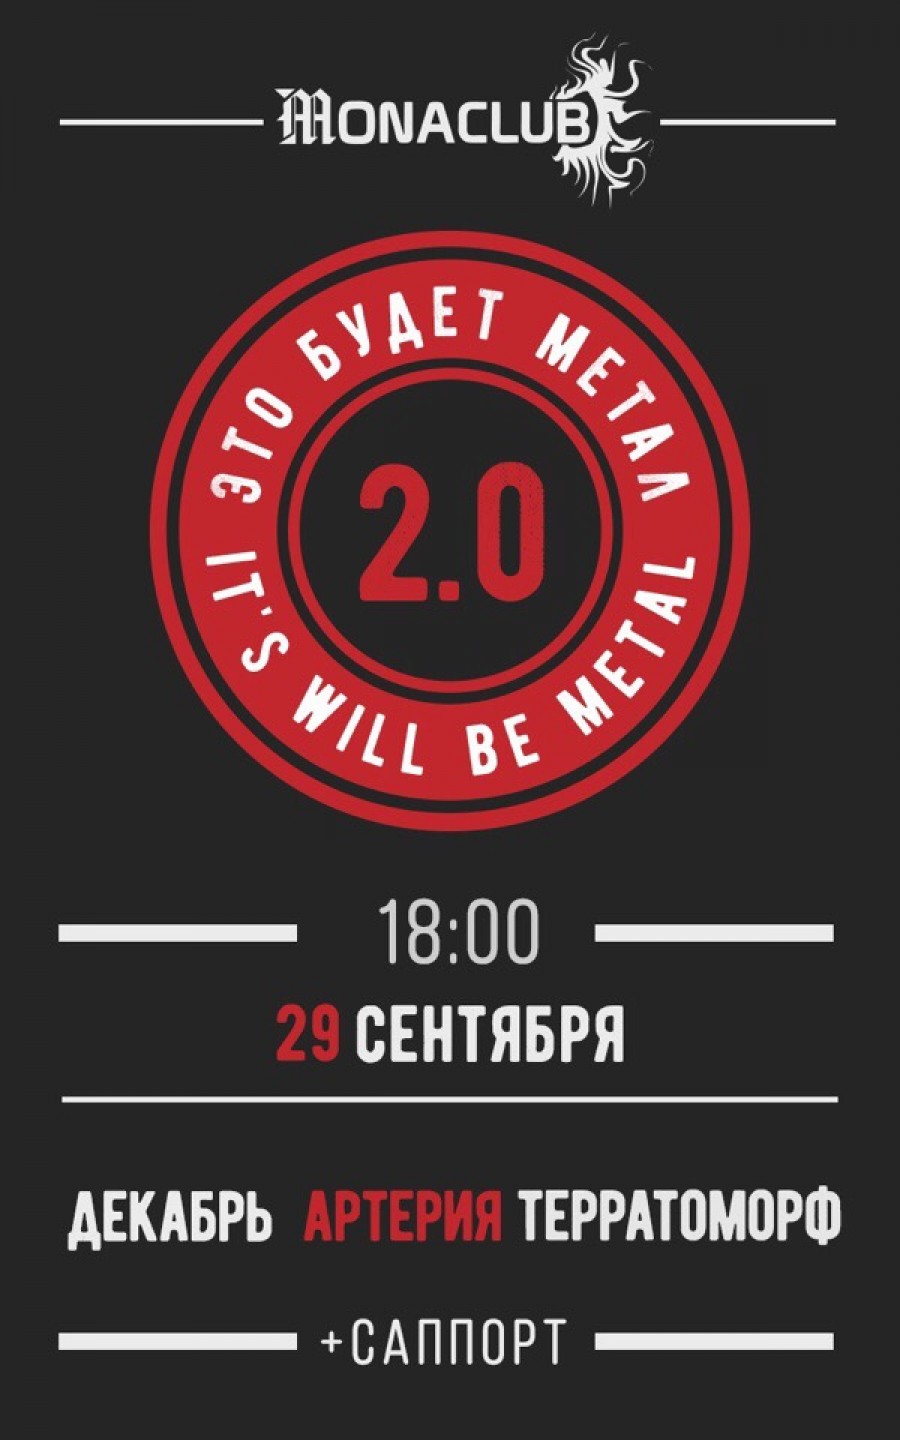 29.09 – Фестиваль “Это Будет Метал 2.0” – Monaclub, Мск